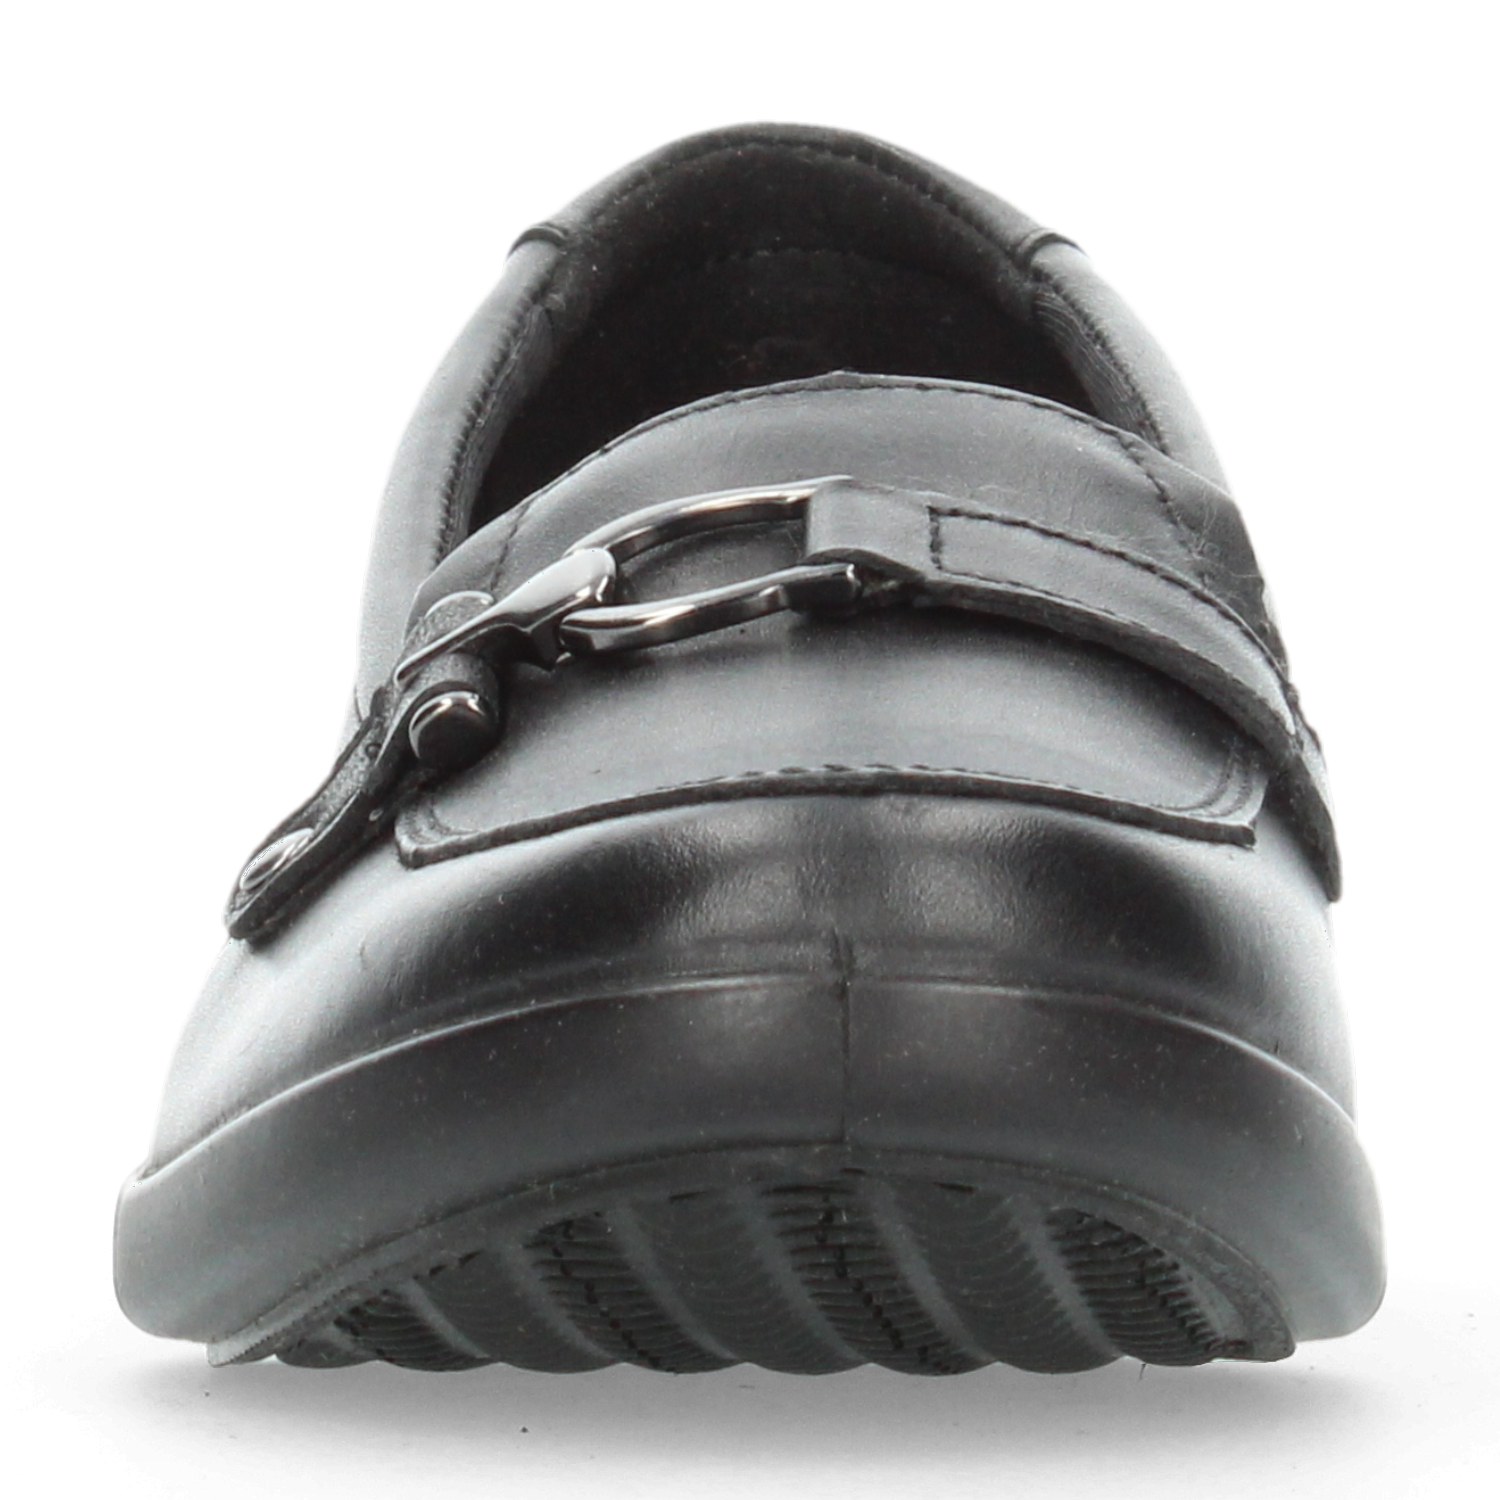 Zapato Casual Flexi Negro para Mujer [FFF3044] - Zapaterias Torreon